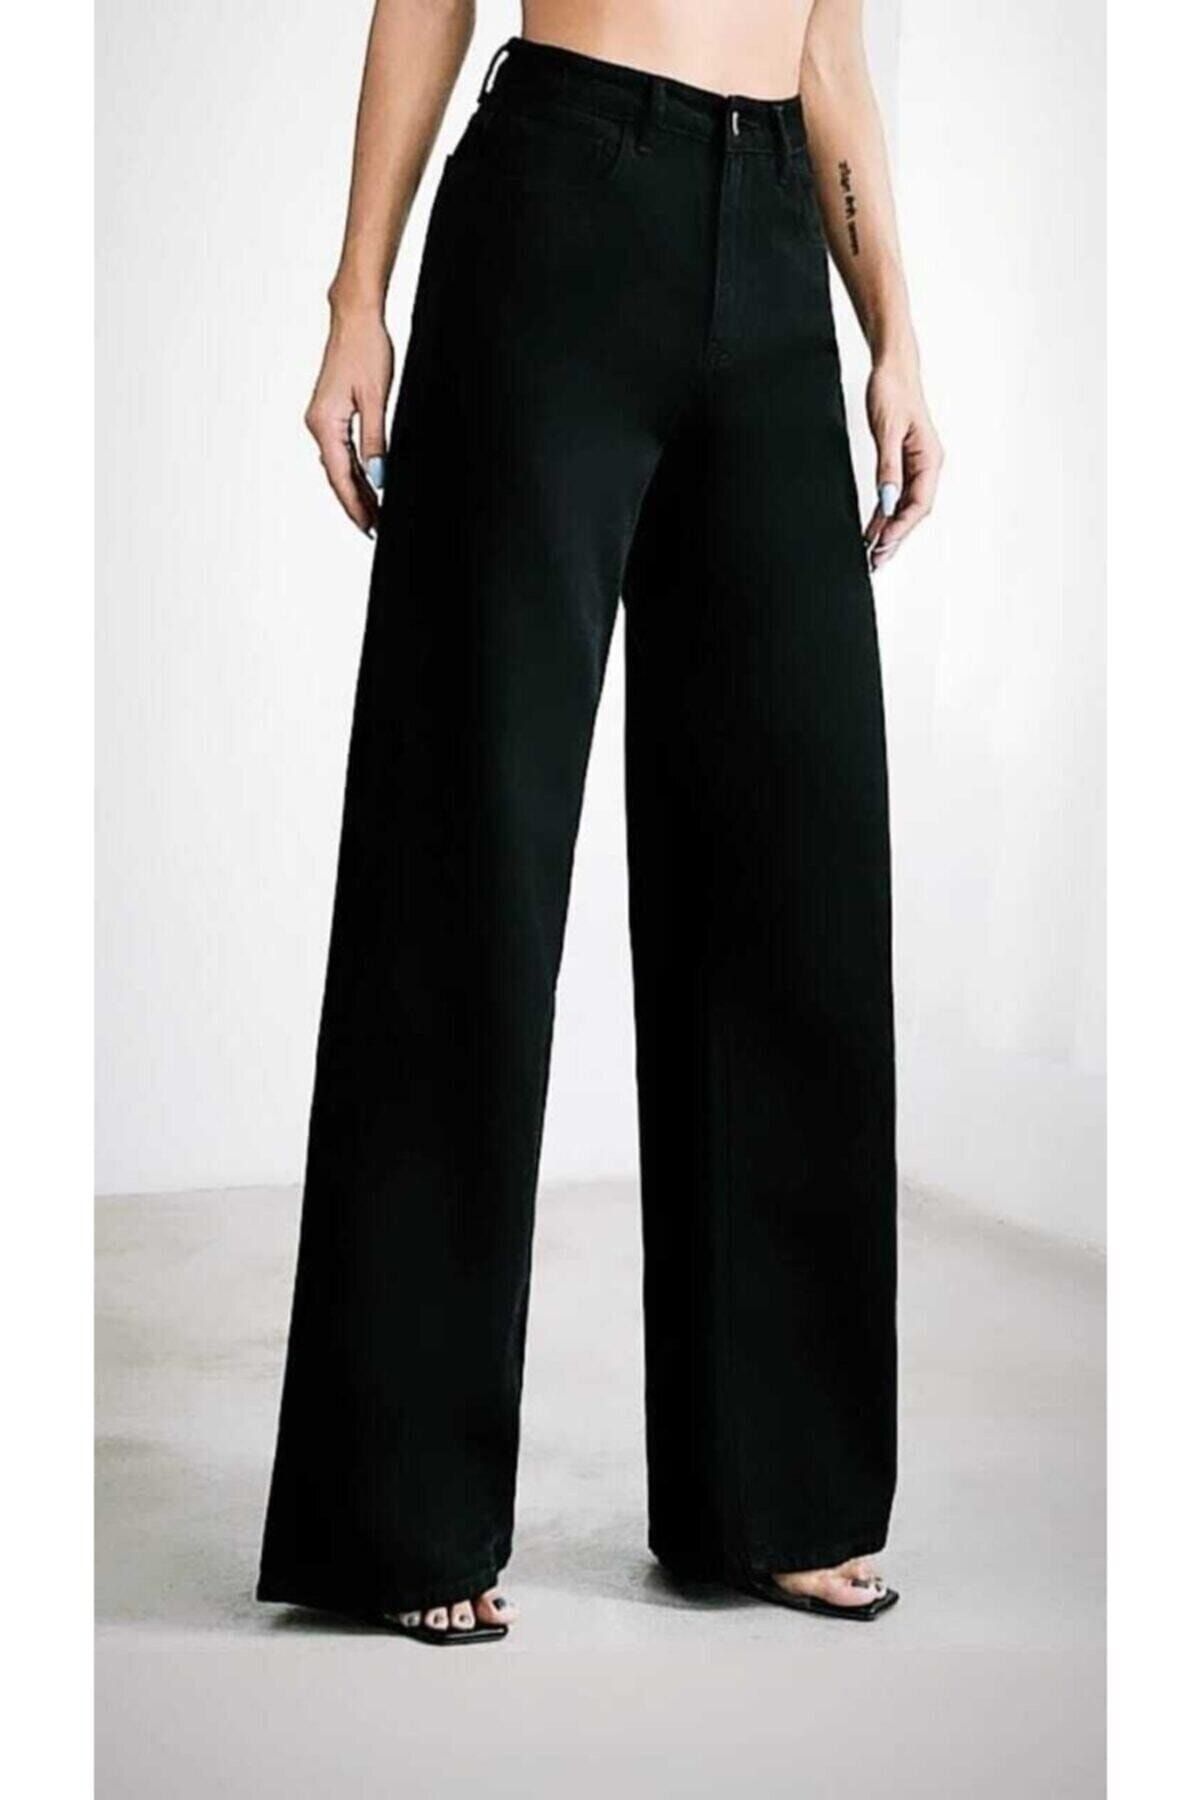 Livik Women's Lycra Women's Black Super High Waist Wide Leg Denim Jeans  Palazzo Pants - Trendyol